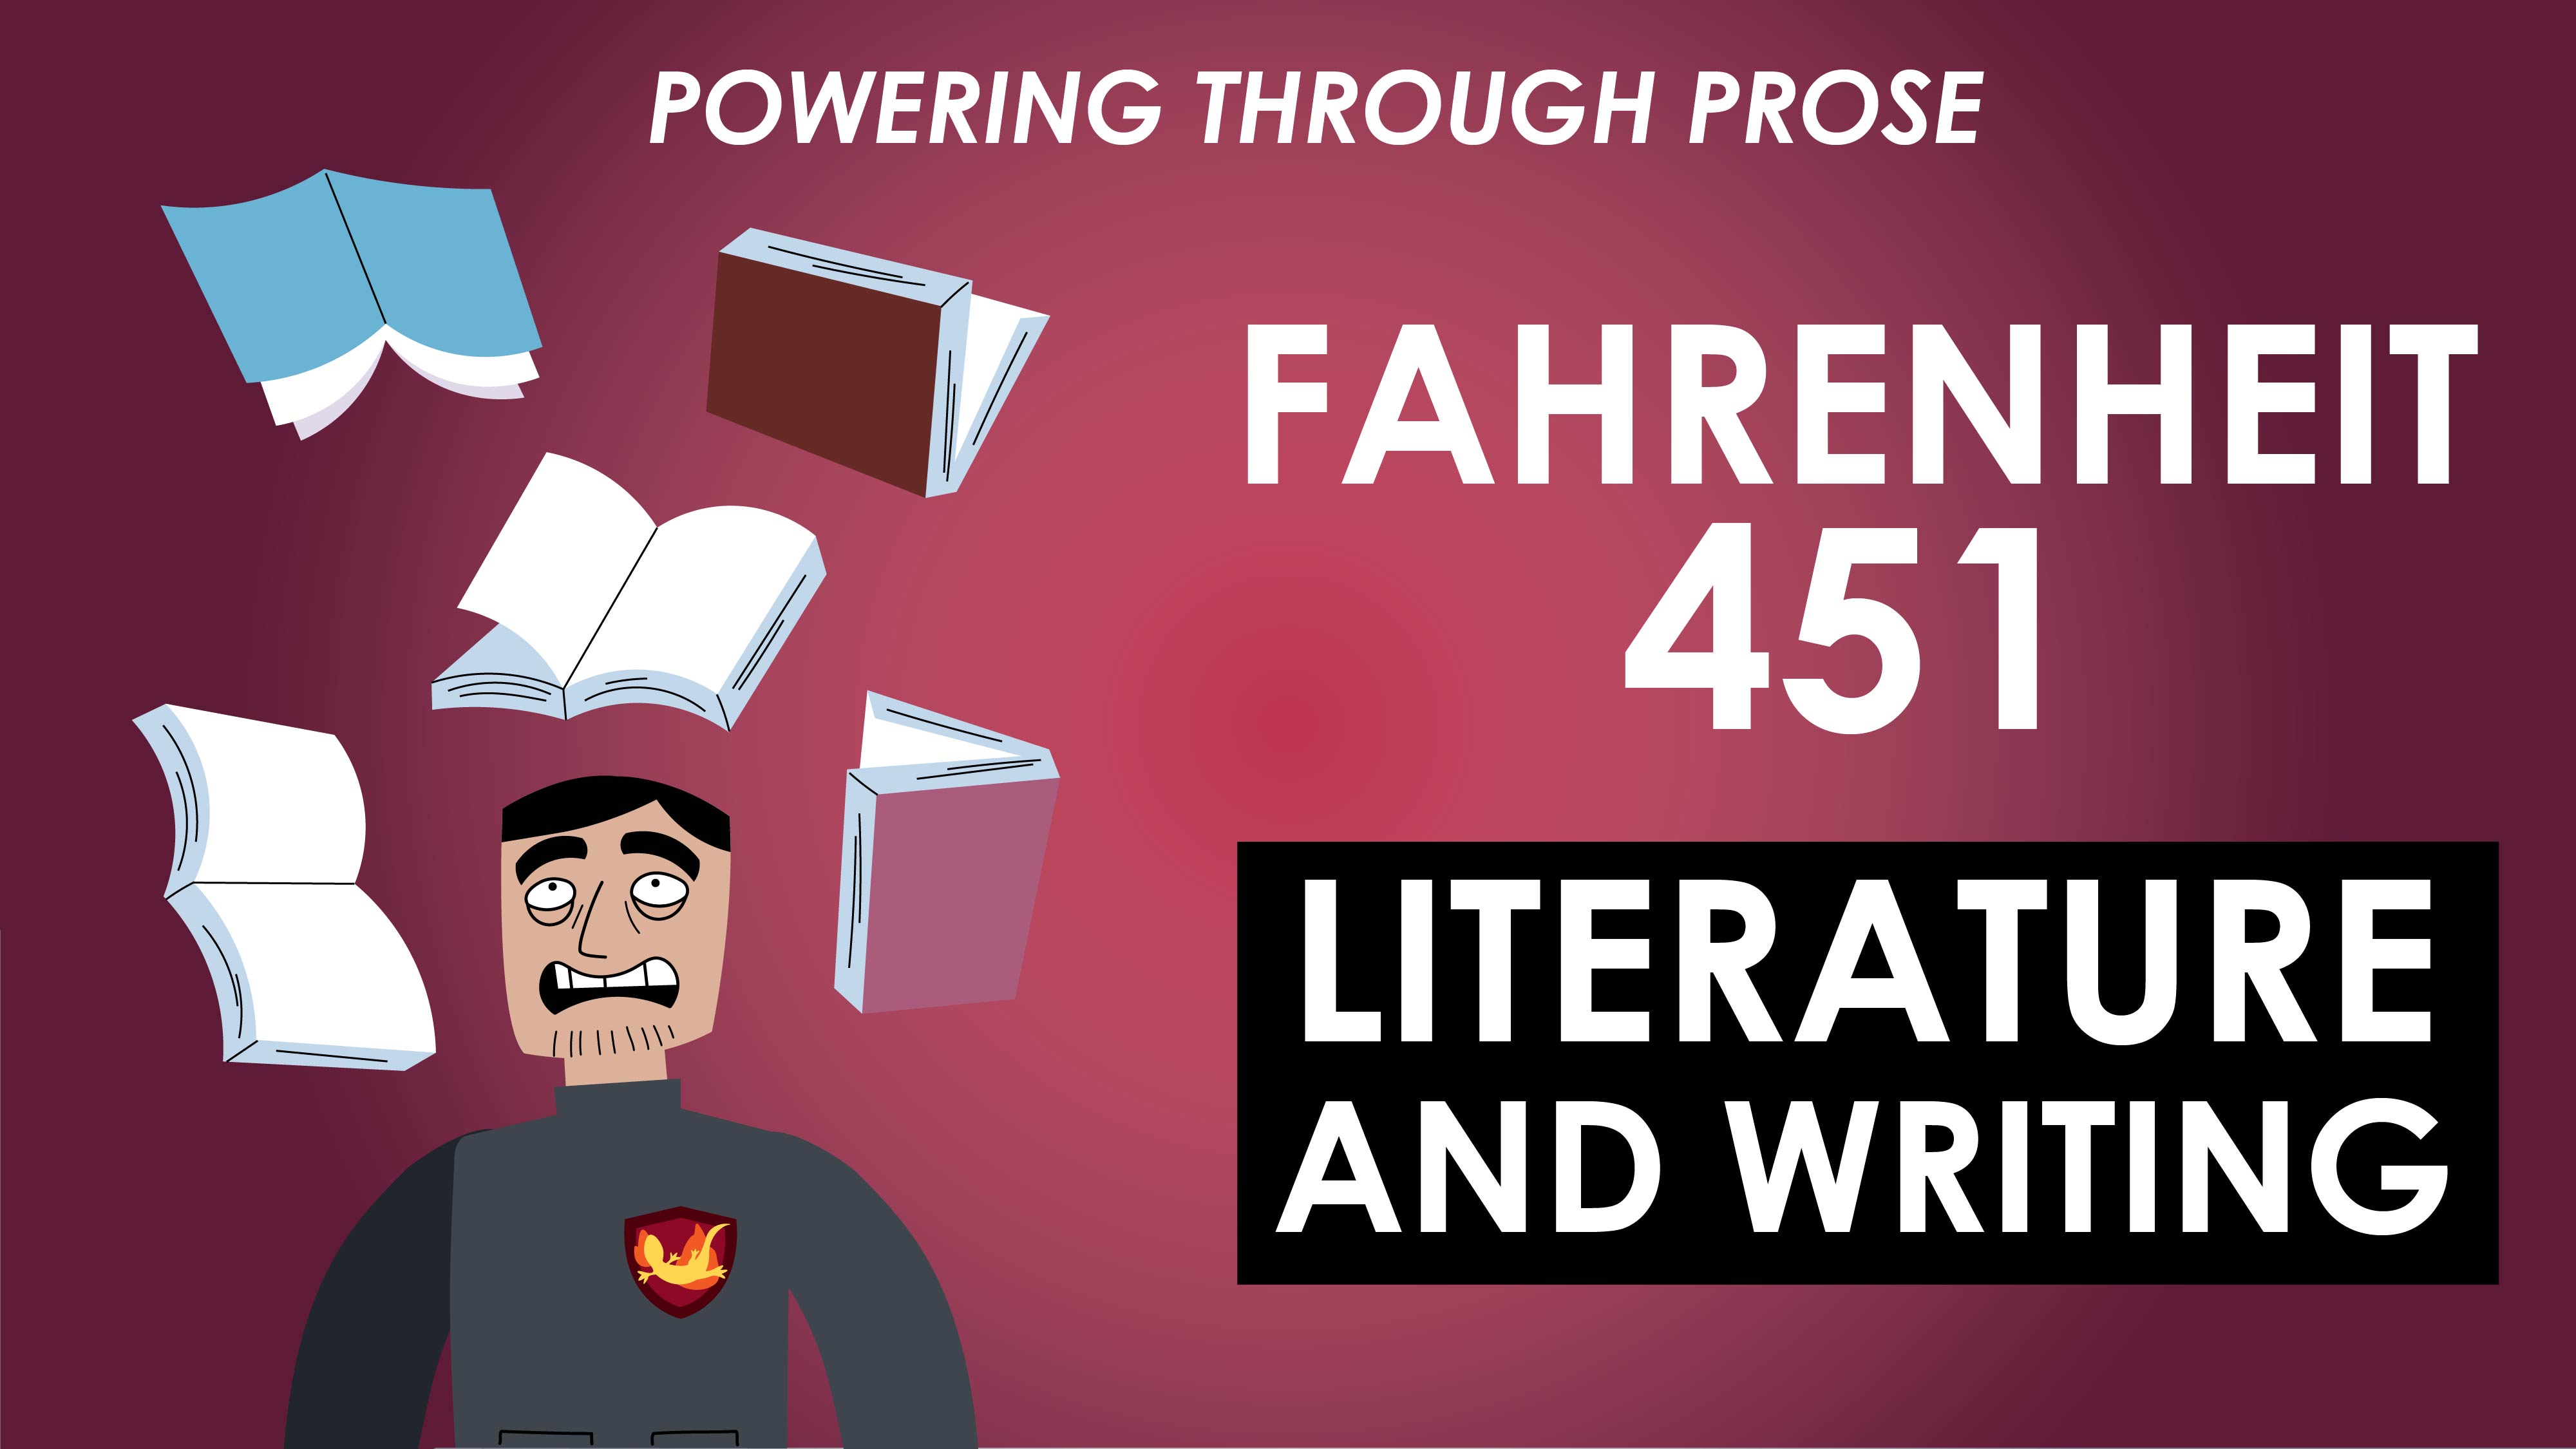 Fahrenheit 451 - Ray Bradbury - Literature and Writing - Powering Through Prose Series